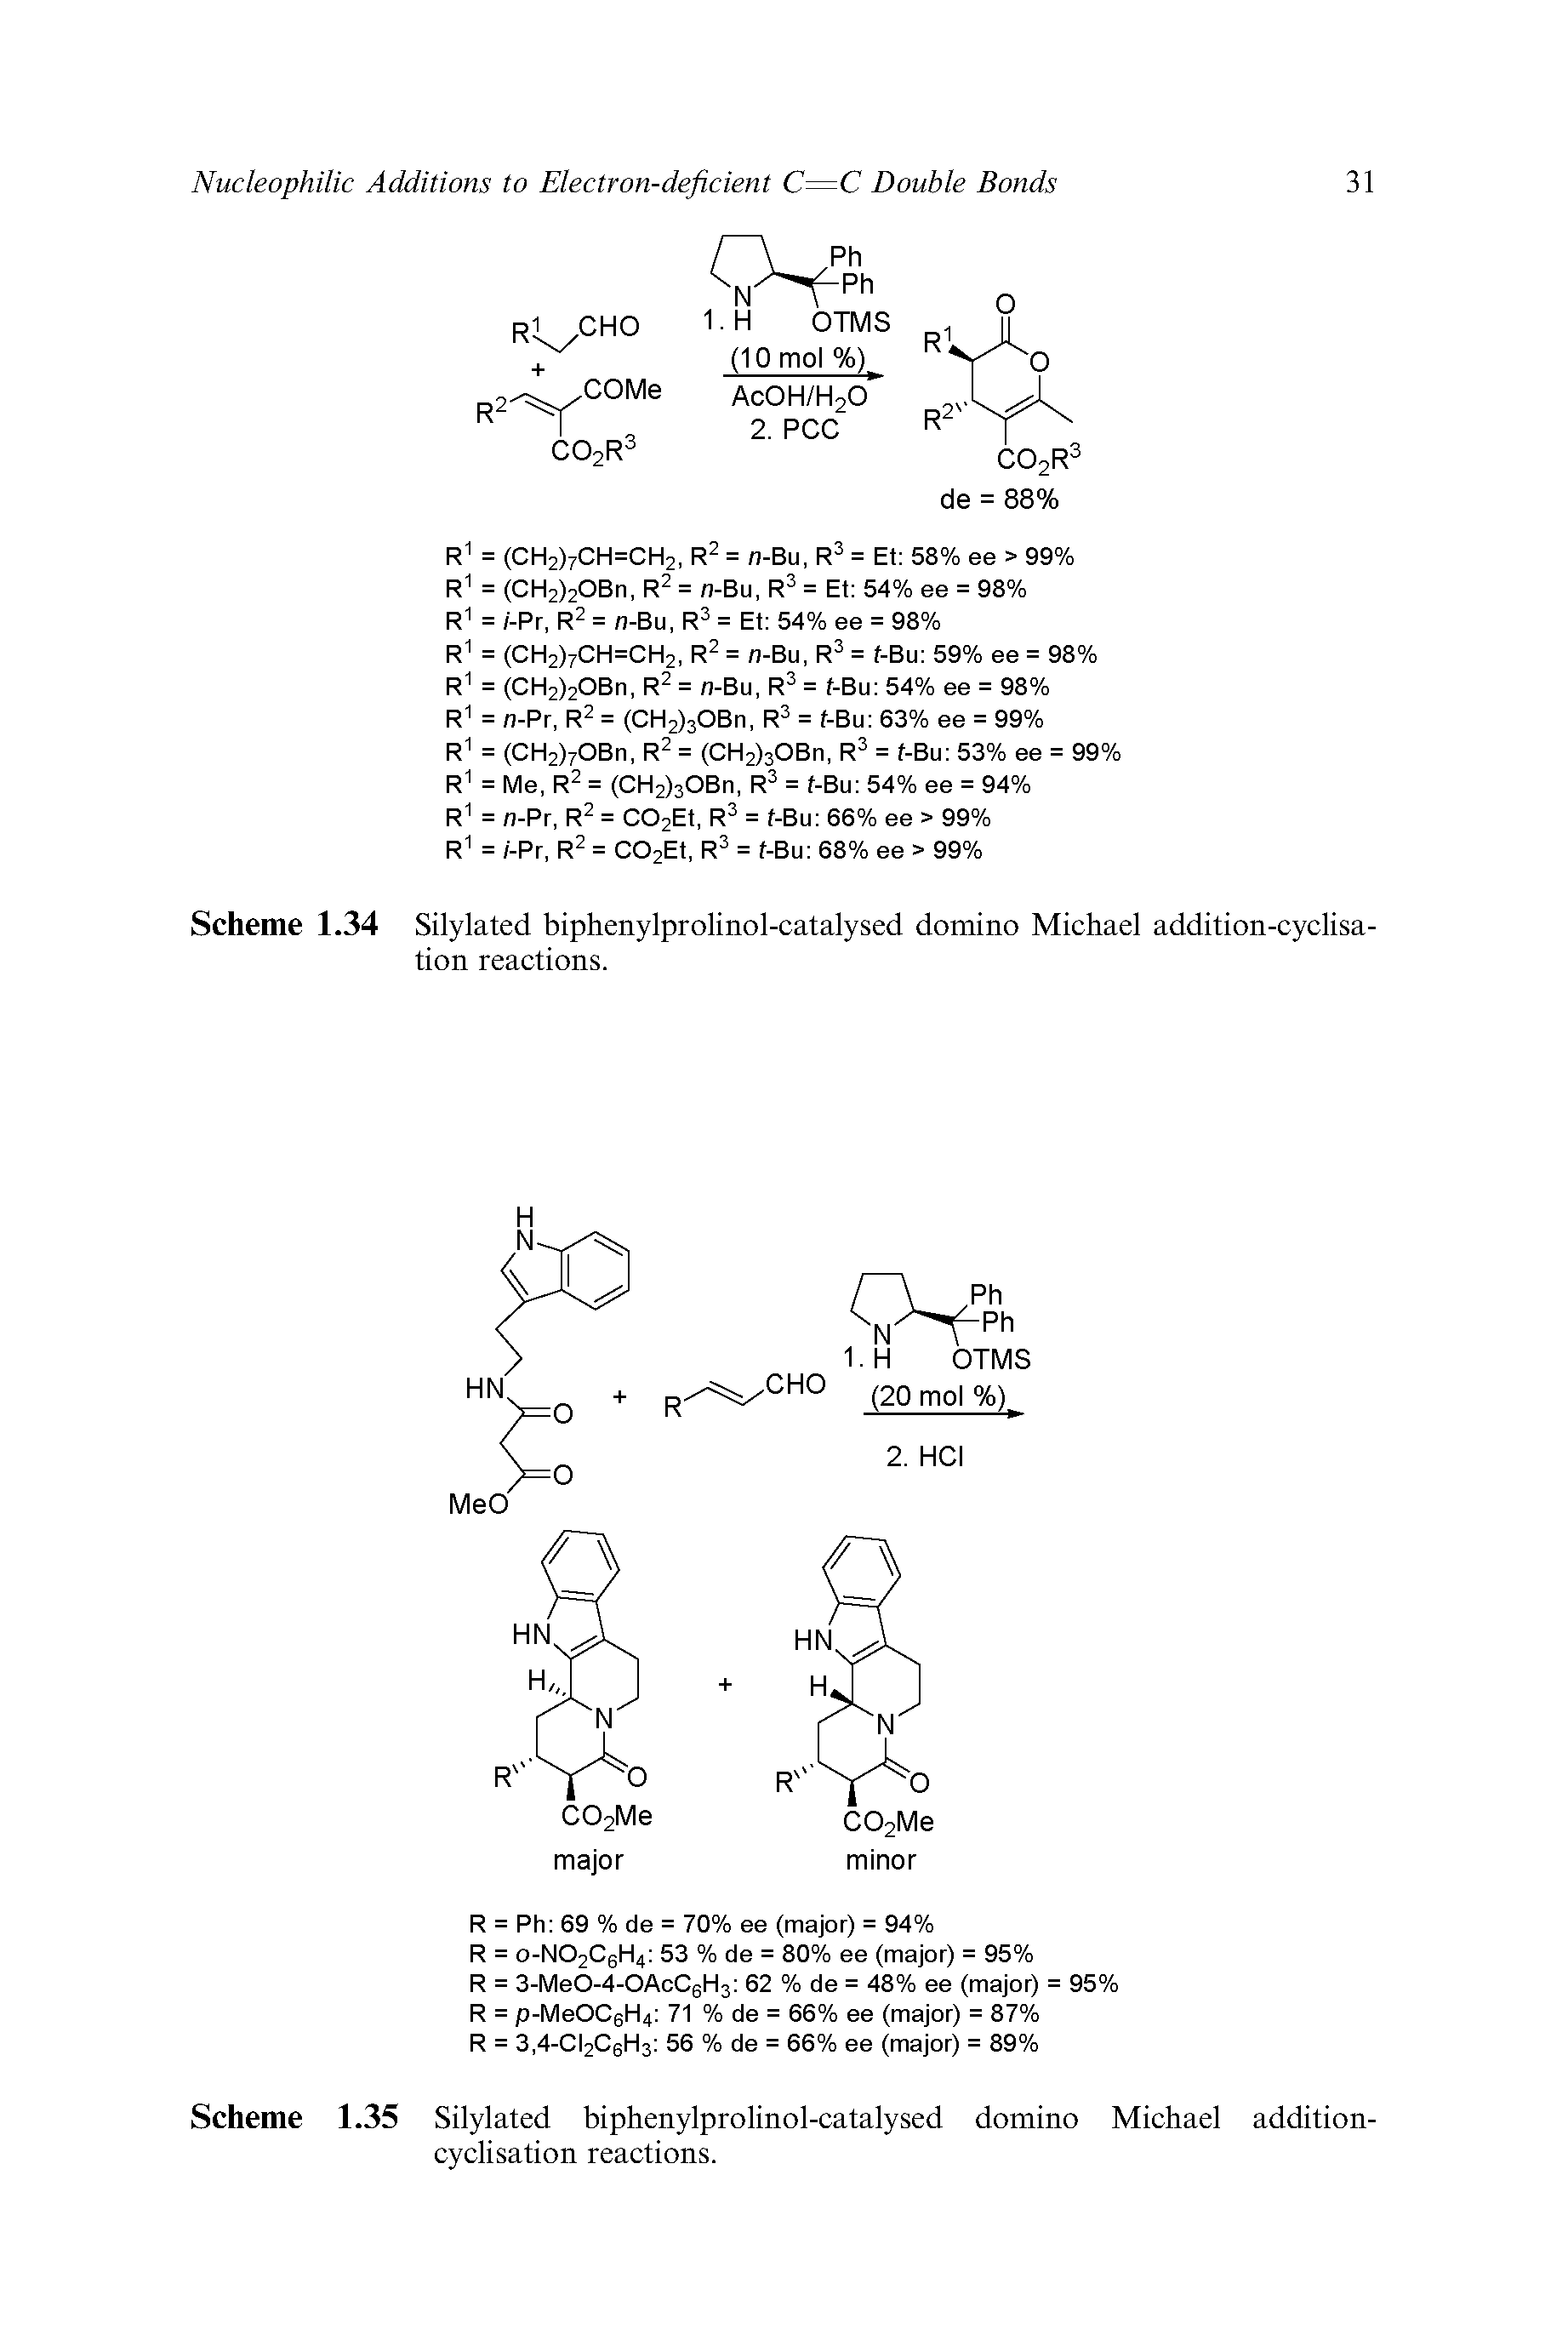 Scheme 1.35 Silylated biphenylprolinol-catalysed domino Michael addition-cyclisation reactions.